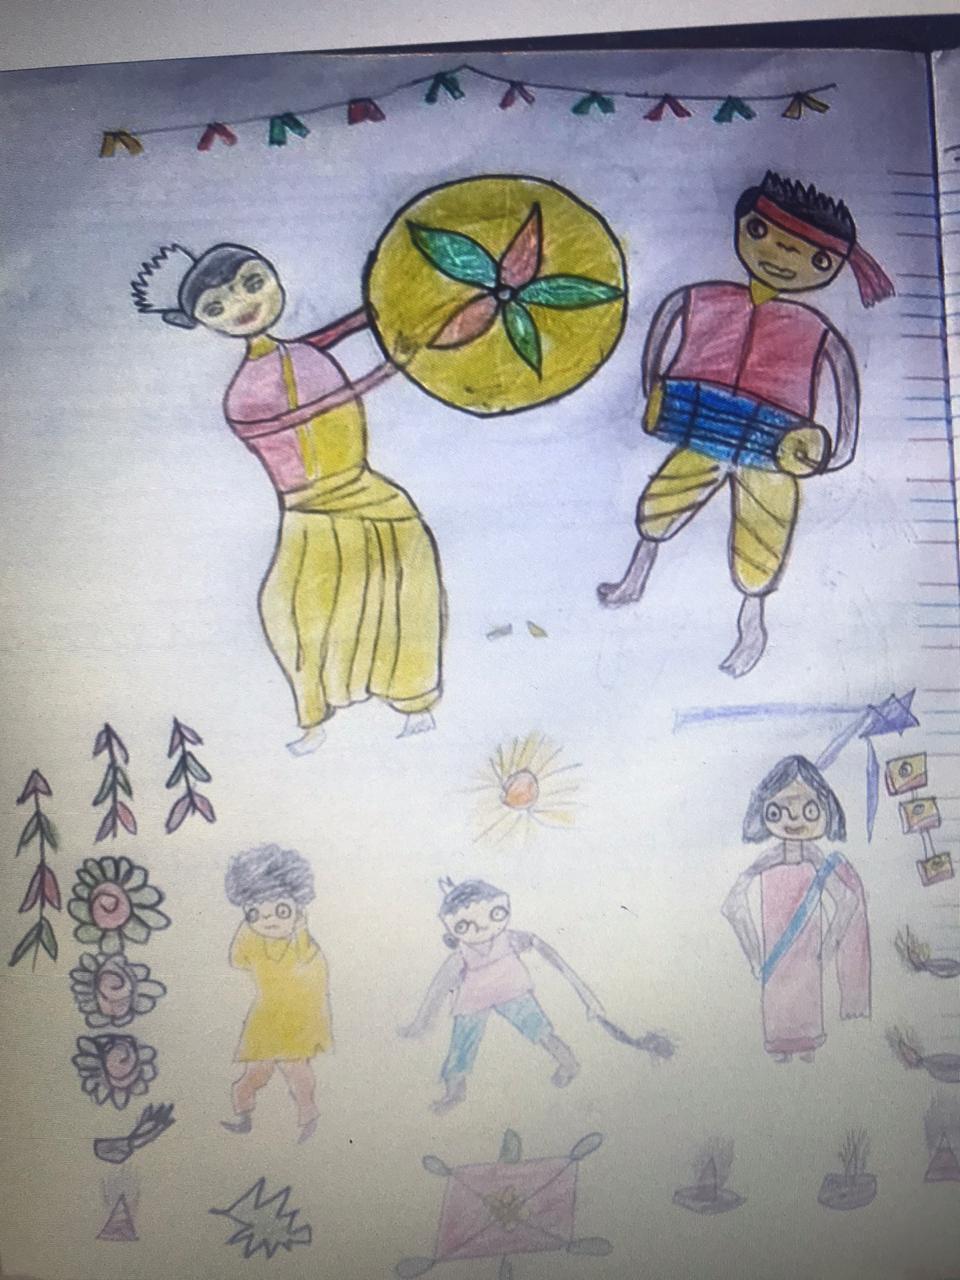 How to draw Bihu festival - Assamese new year - YouTube